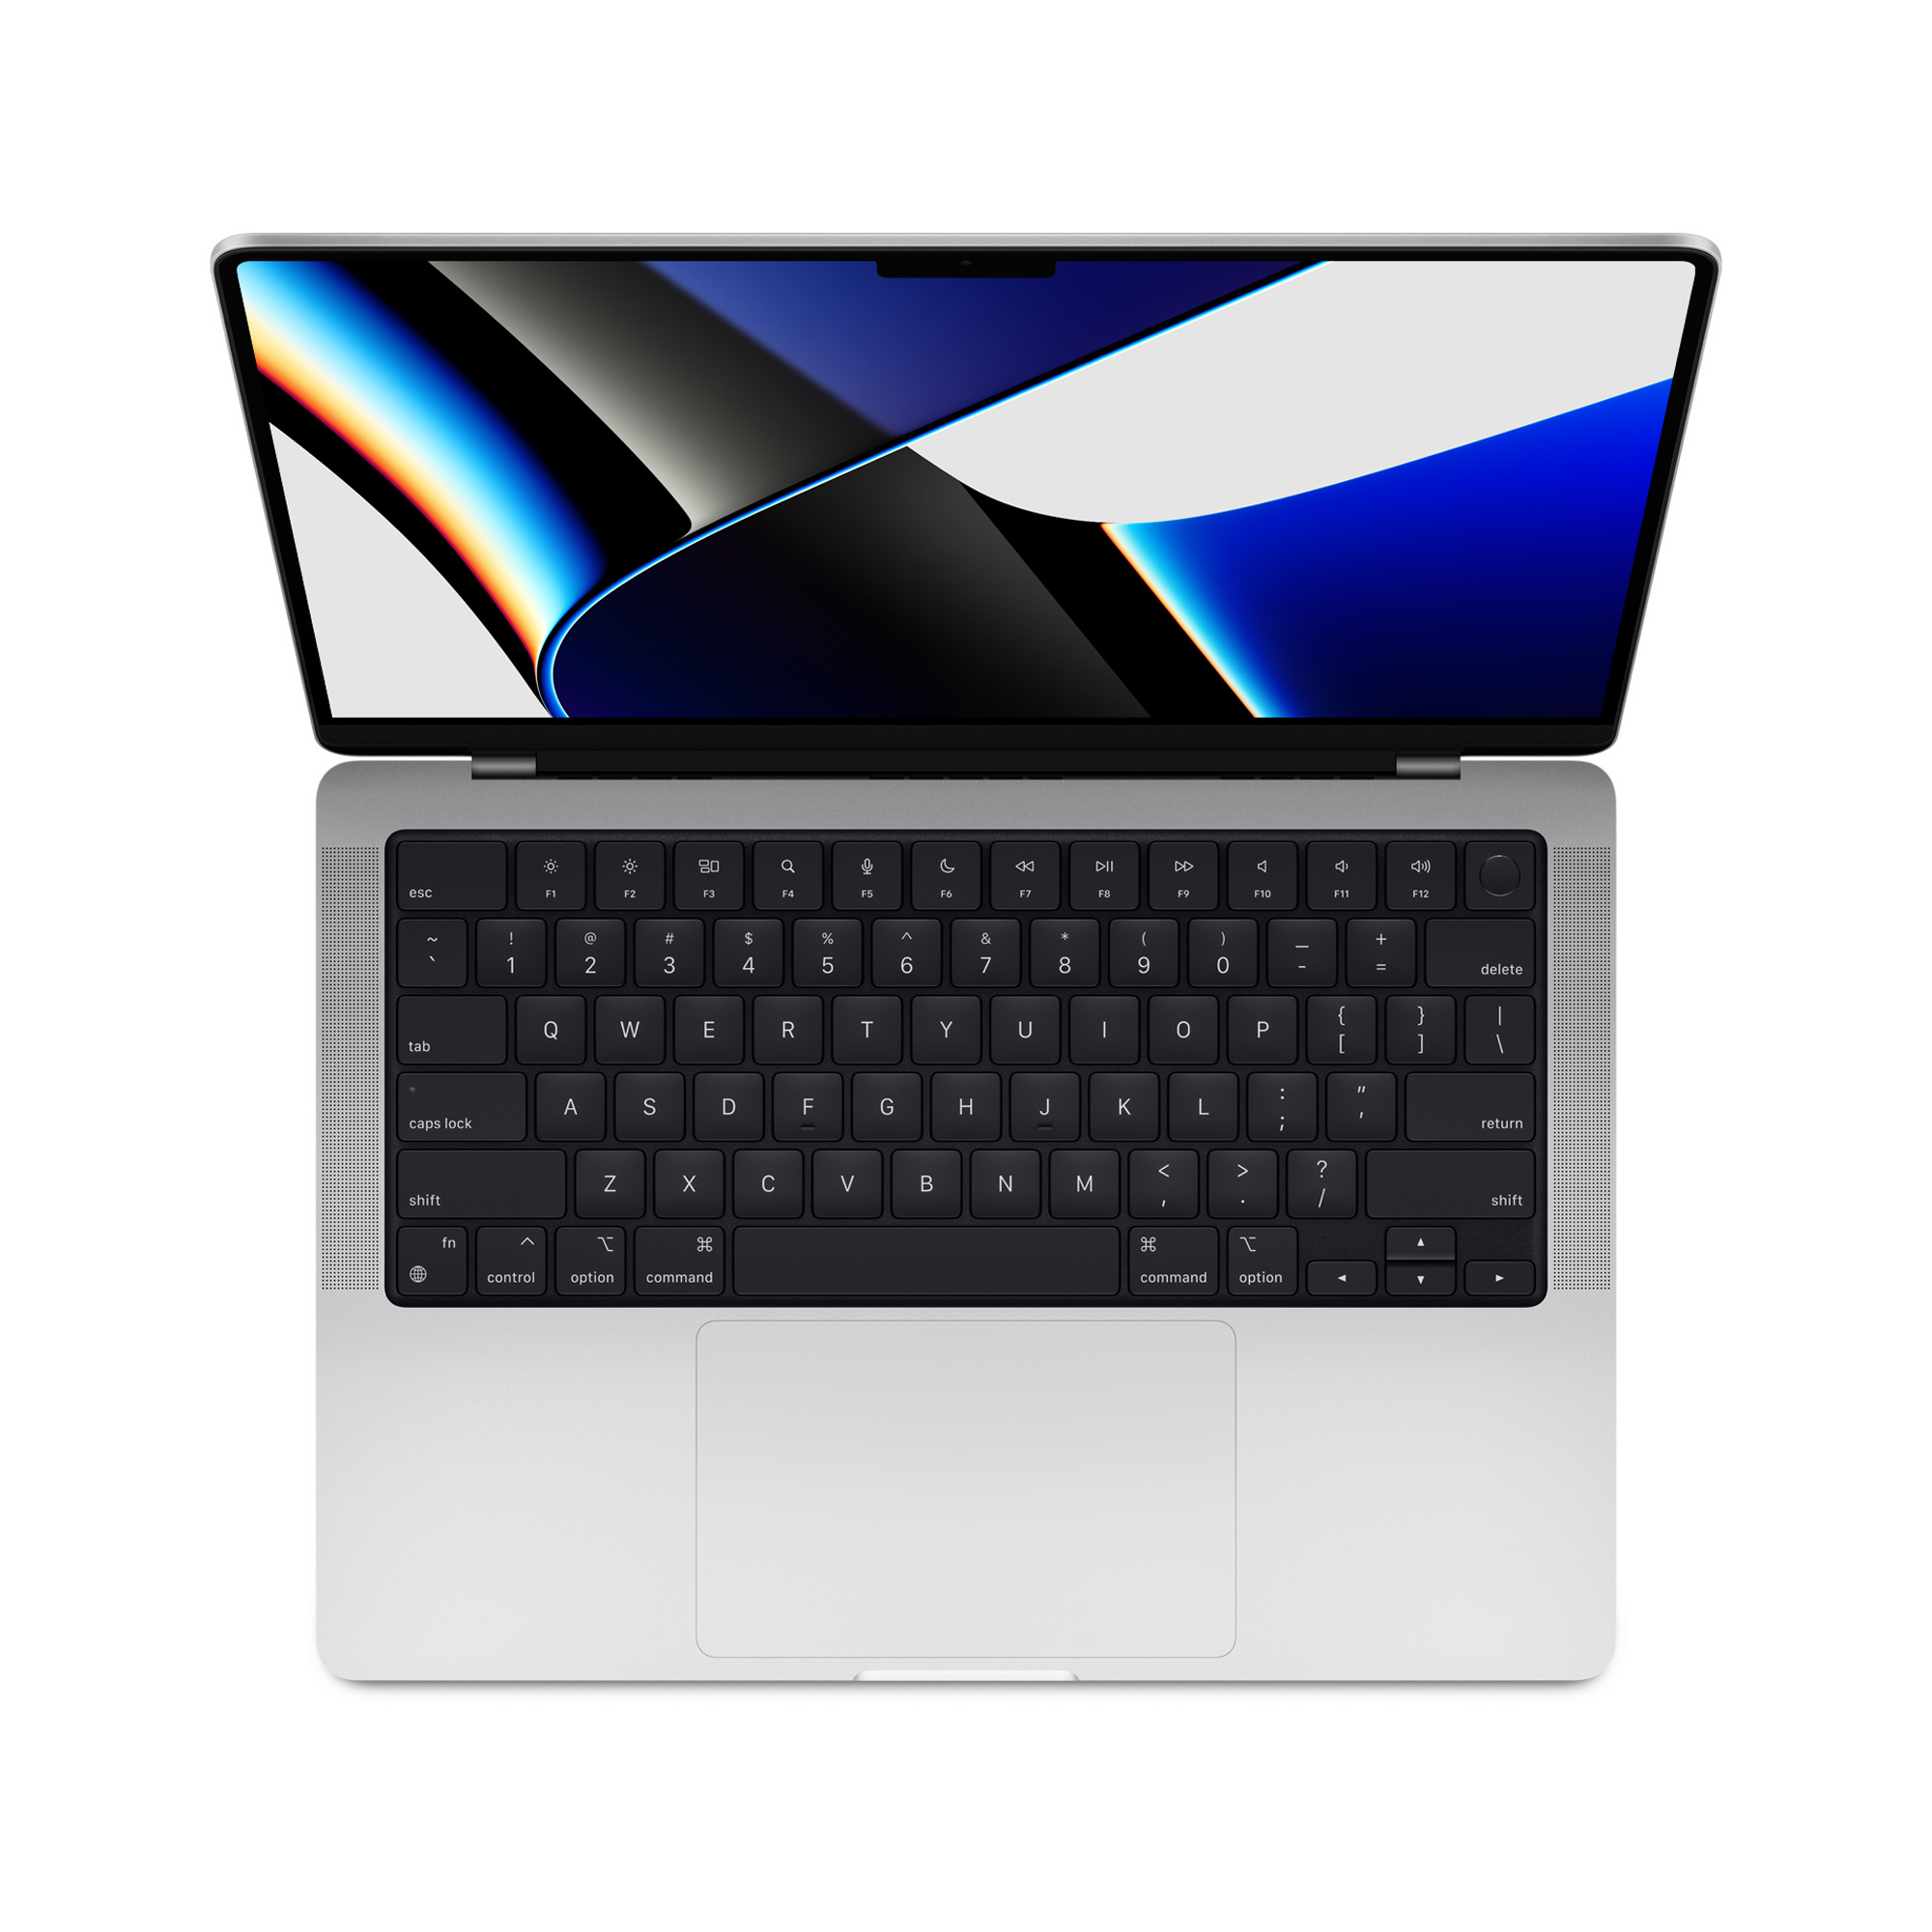 Apple MacBook Pro 15 (4th Gen) Dimensions & Drawings